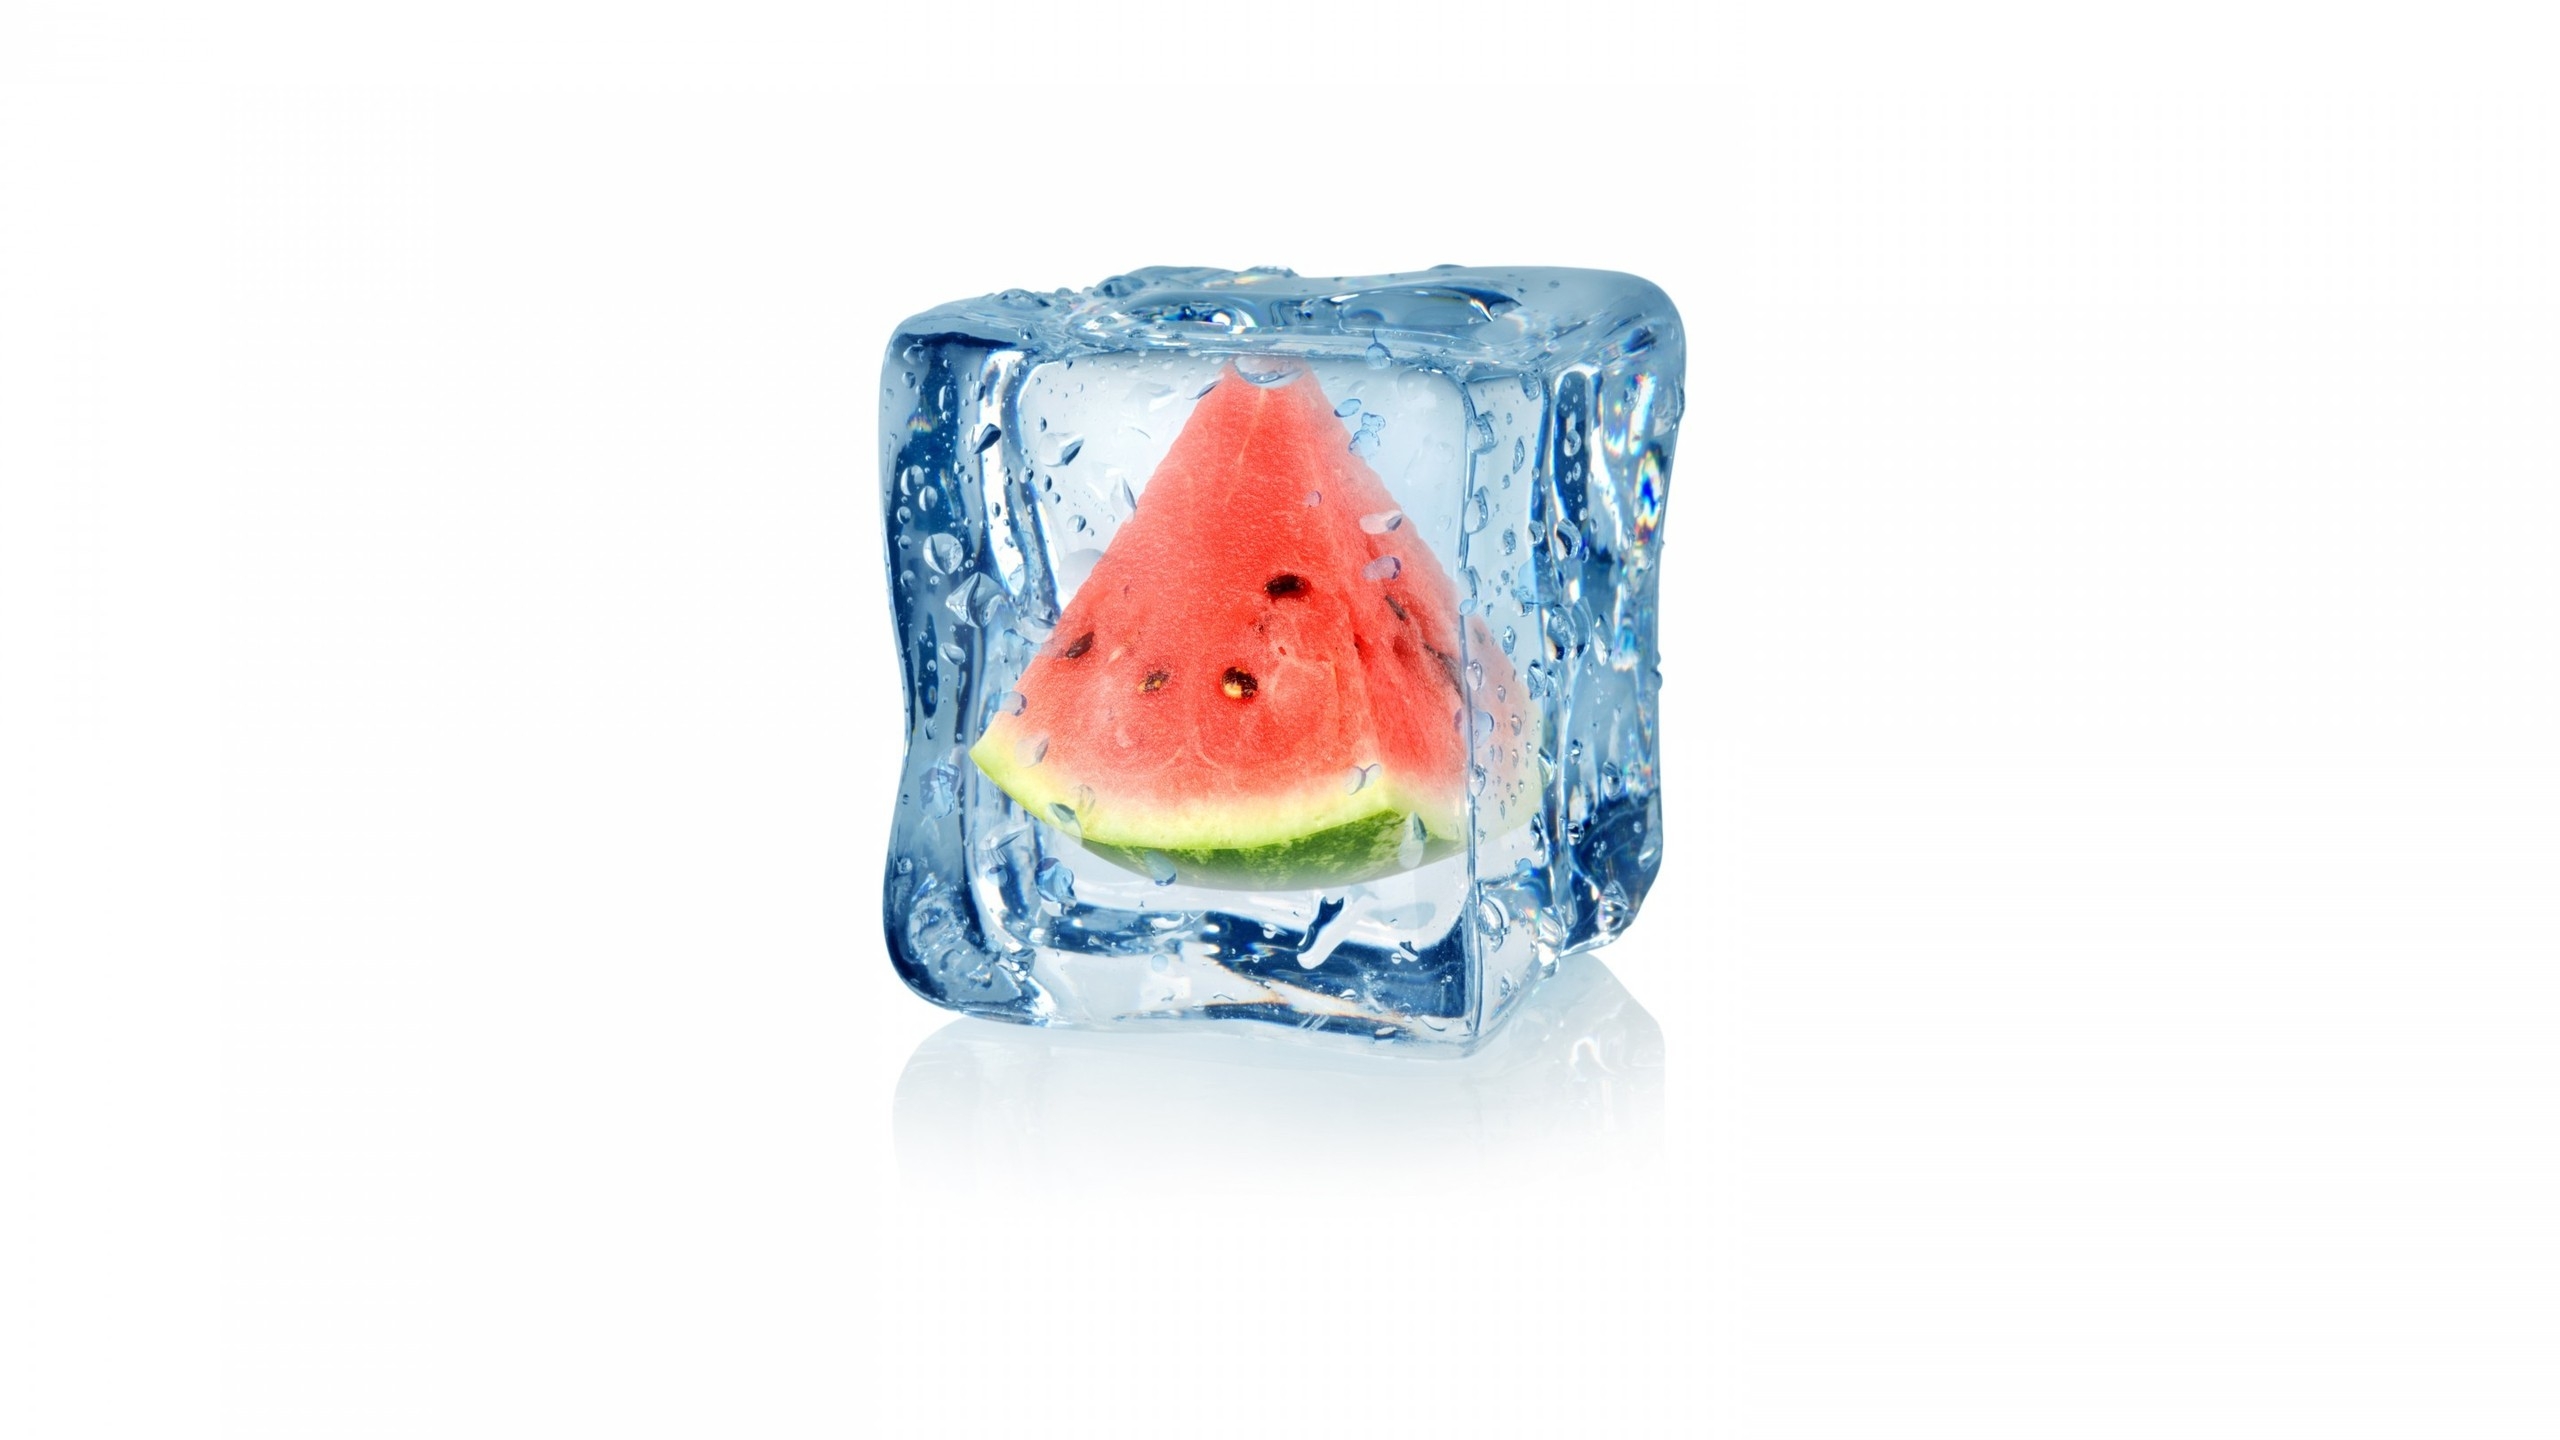 Frozen Watermelon  for 2560x1440 HDTV resolution